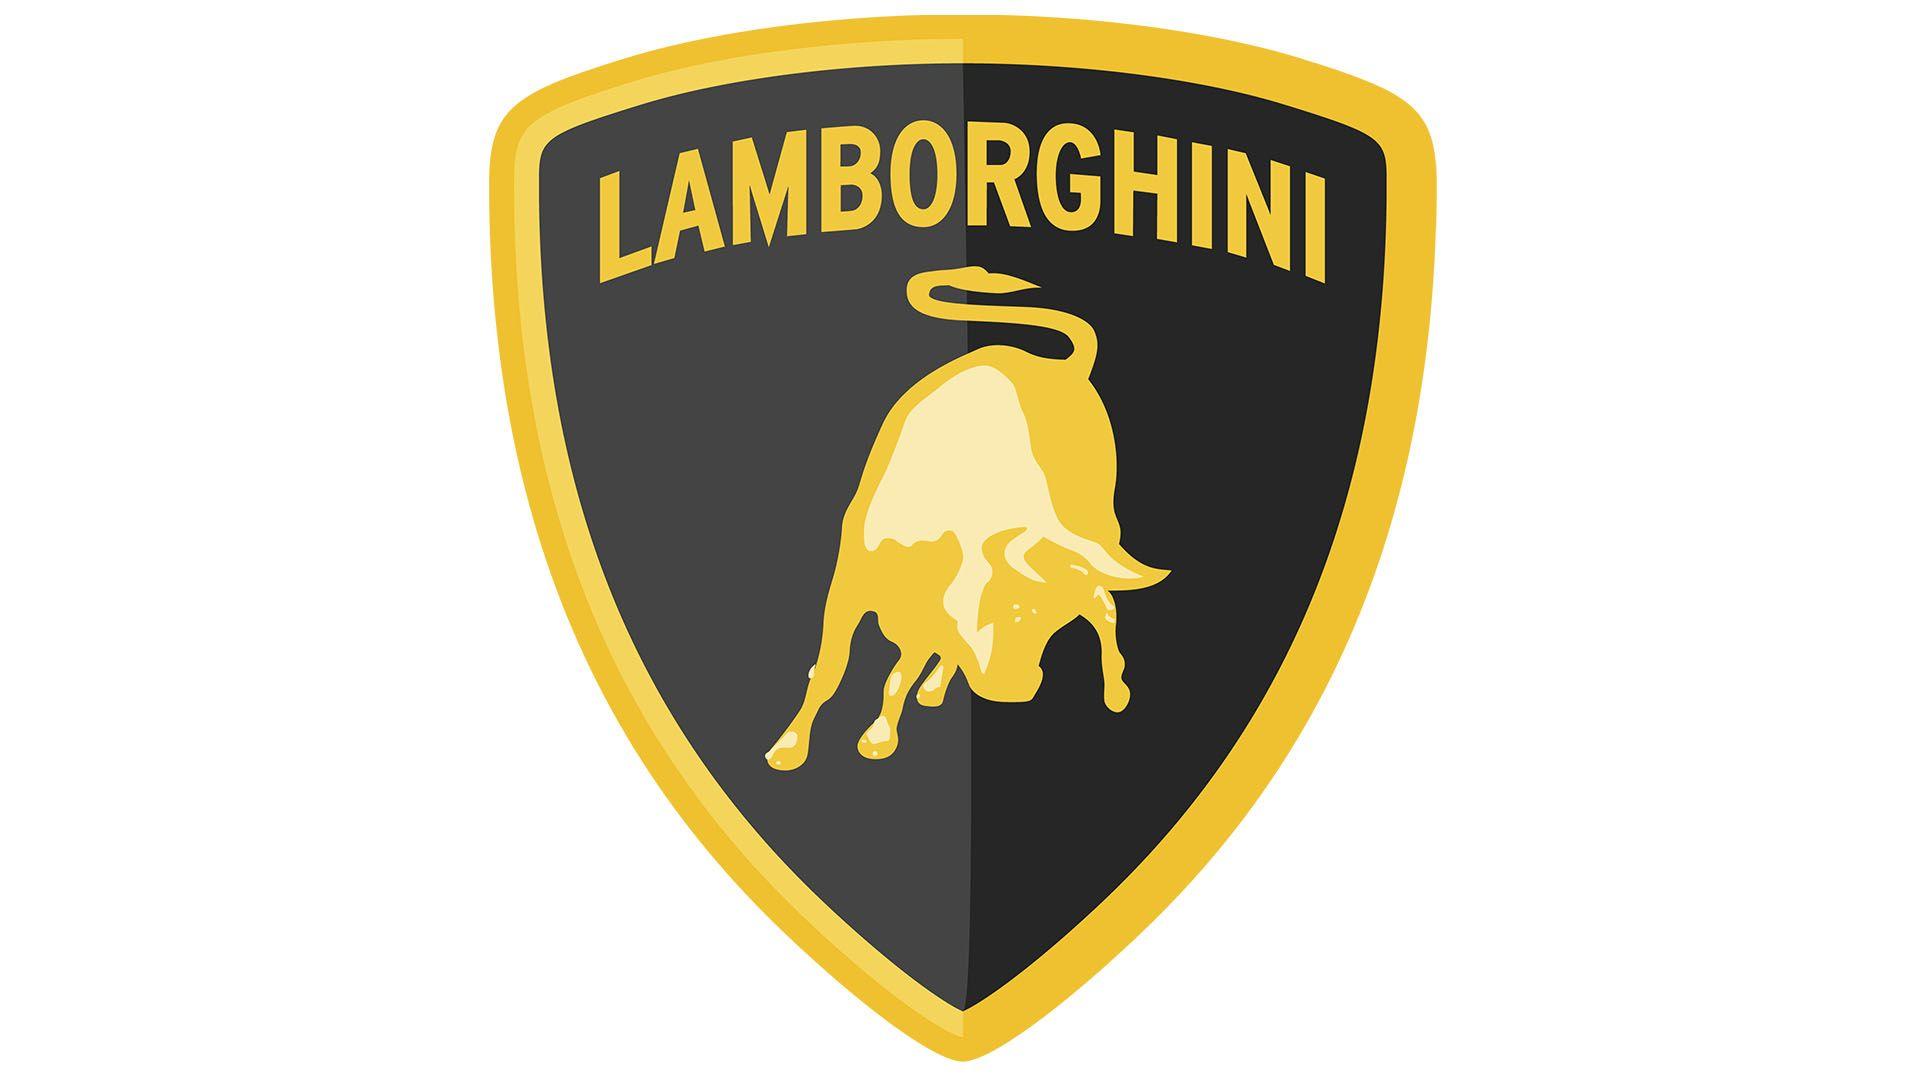 Lamorgini Logo - Lamborghini Logo Meaning and History [Lamborghini symbol]